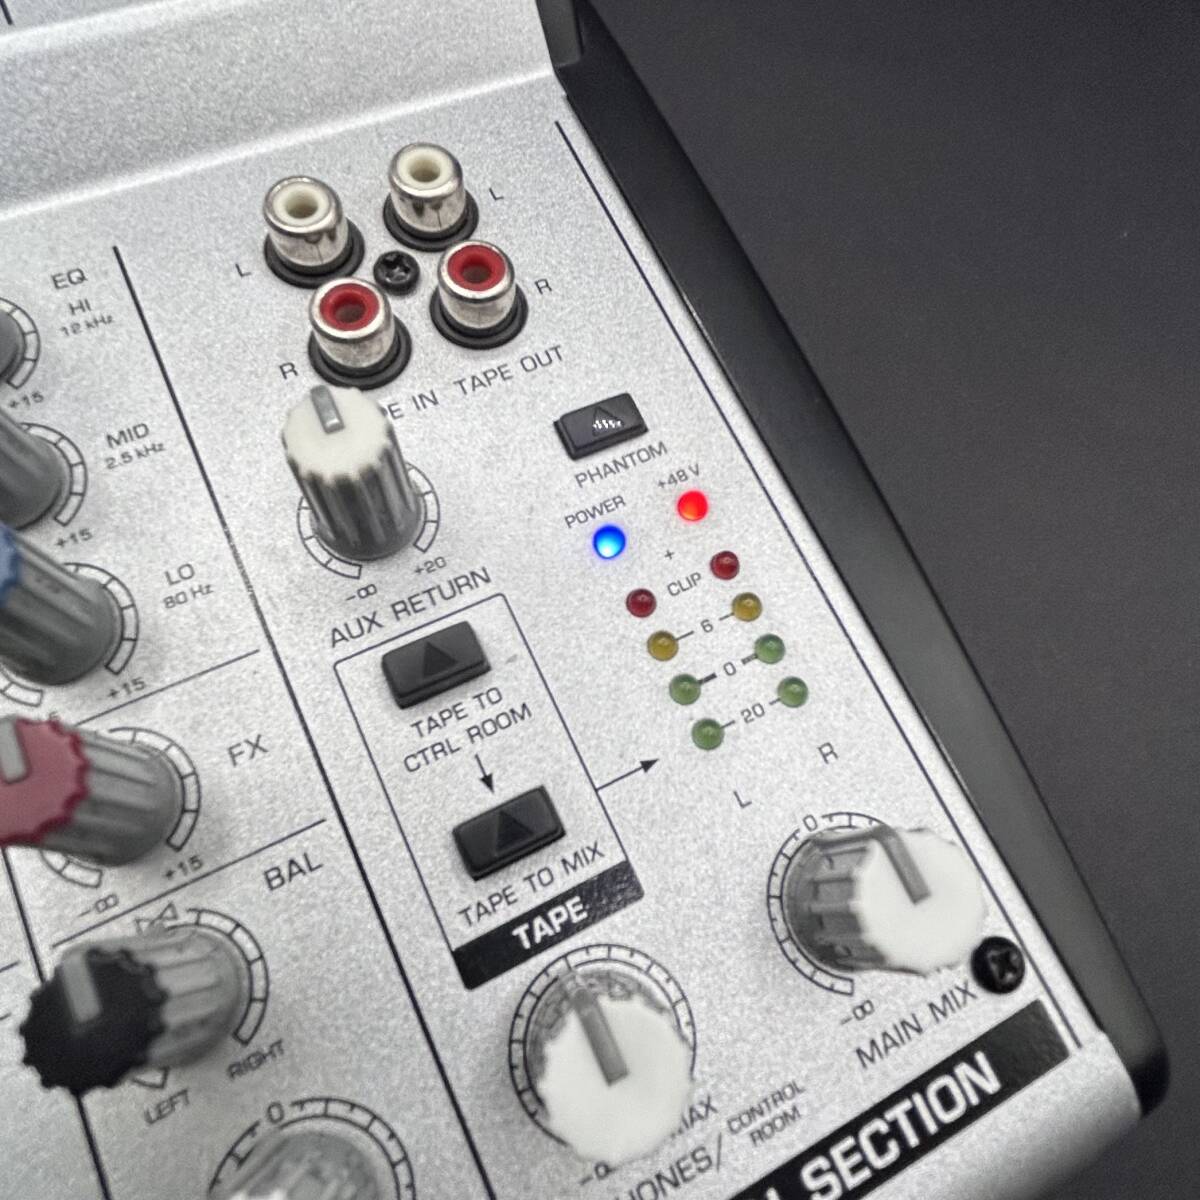 BEHRINGER EURORACK UB802 Behringer analog mixer power supply cable have electrification verification settled 